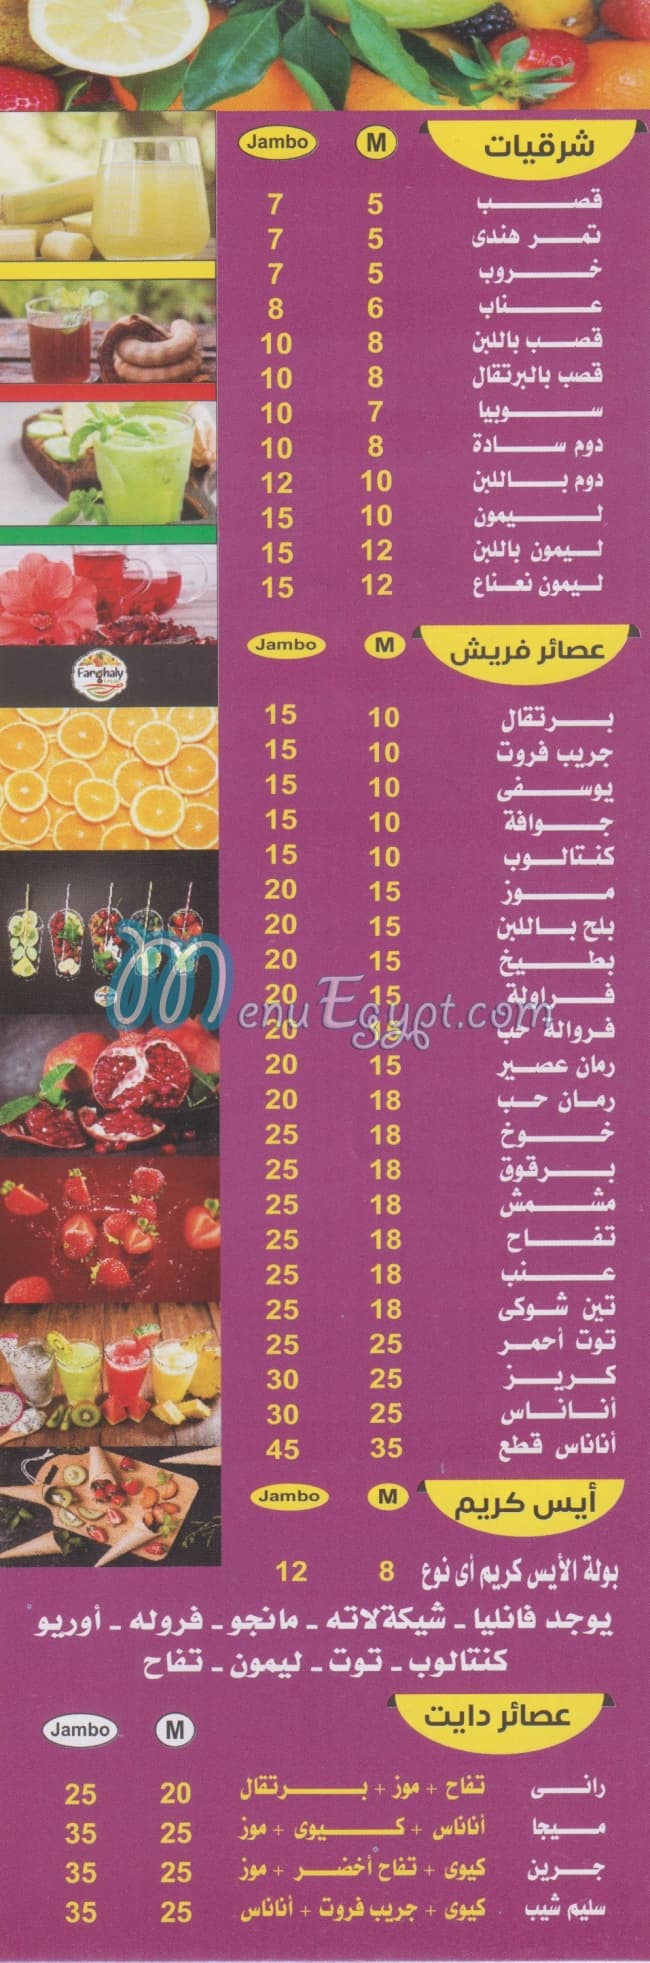 Farghaly Drink menu Egypt 1